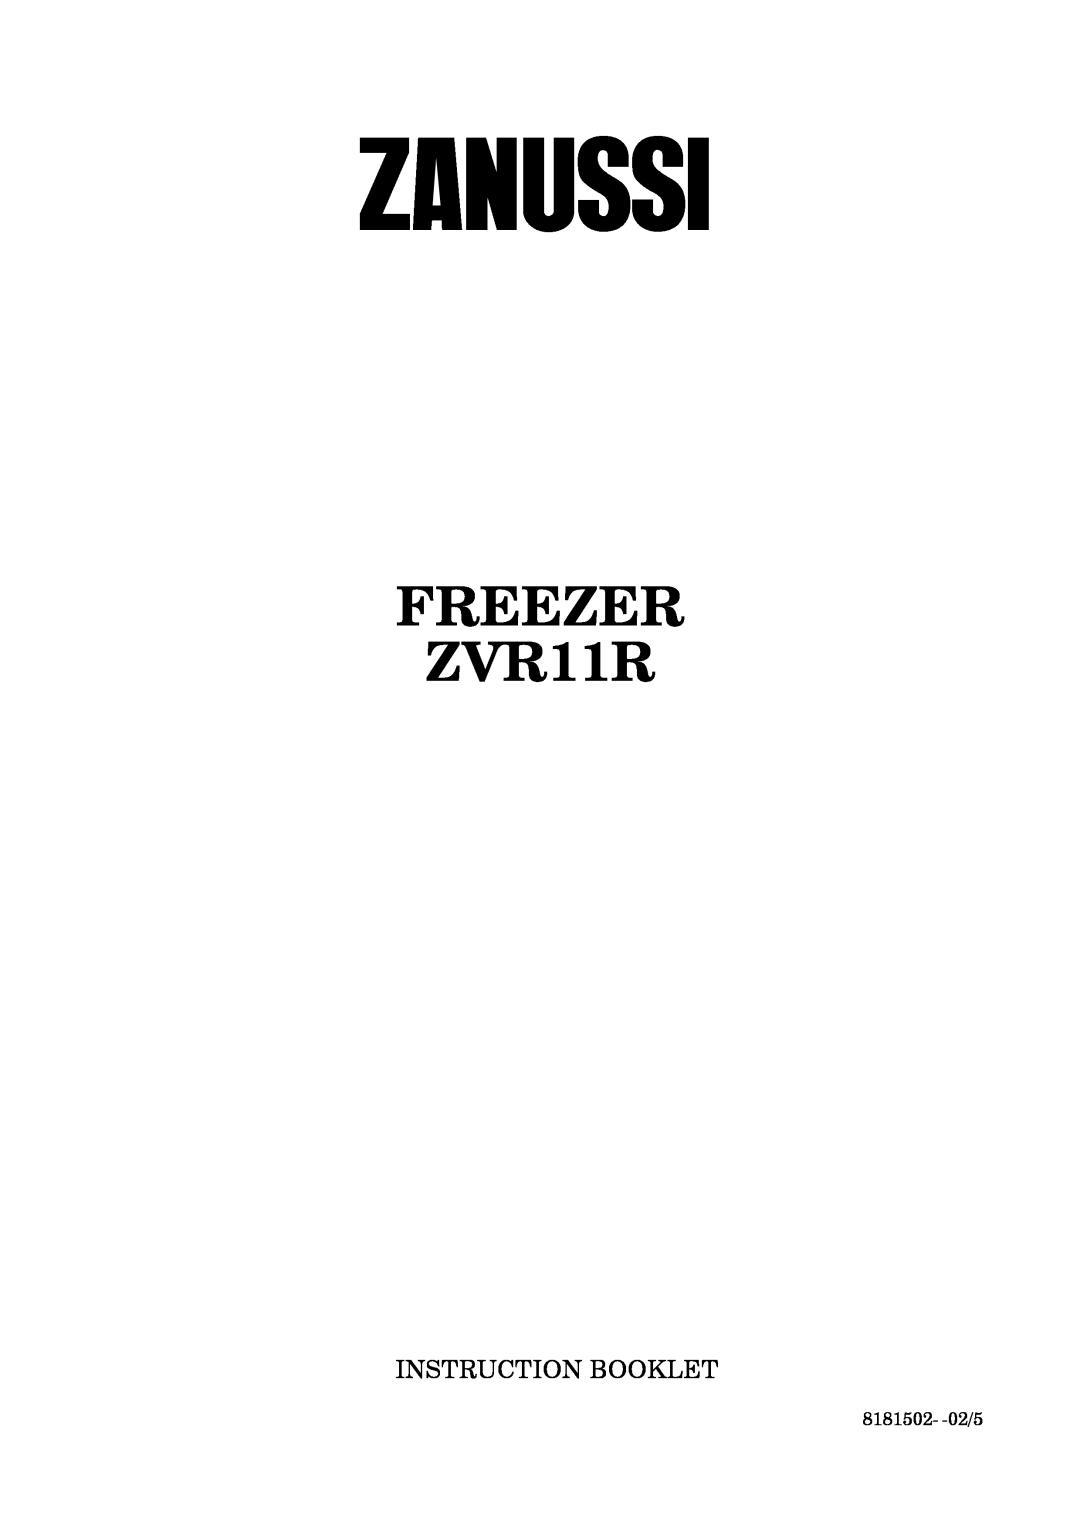 Zanussi manual FREEZER ZVR11R, Instruction Booklet 